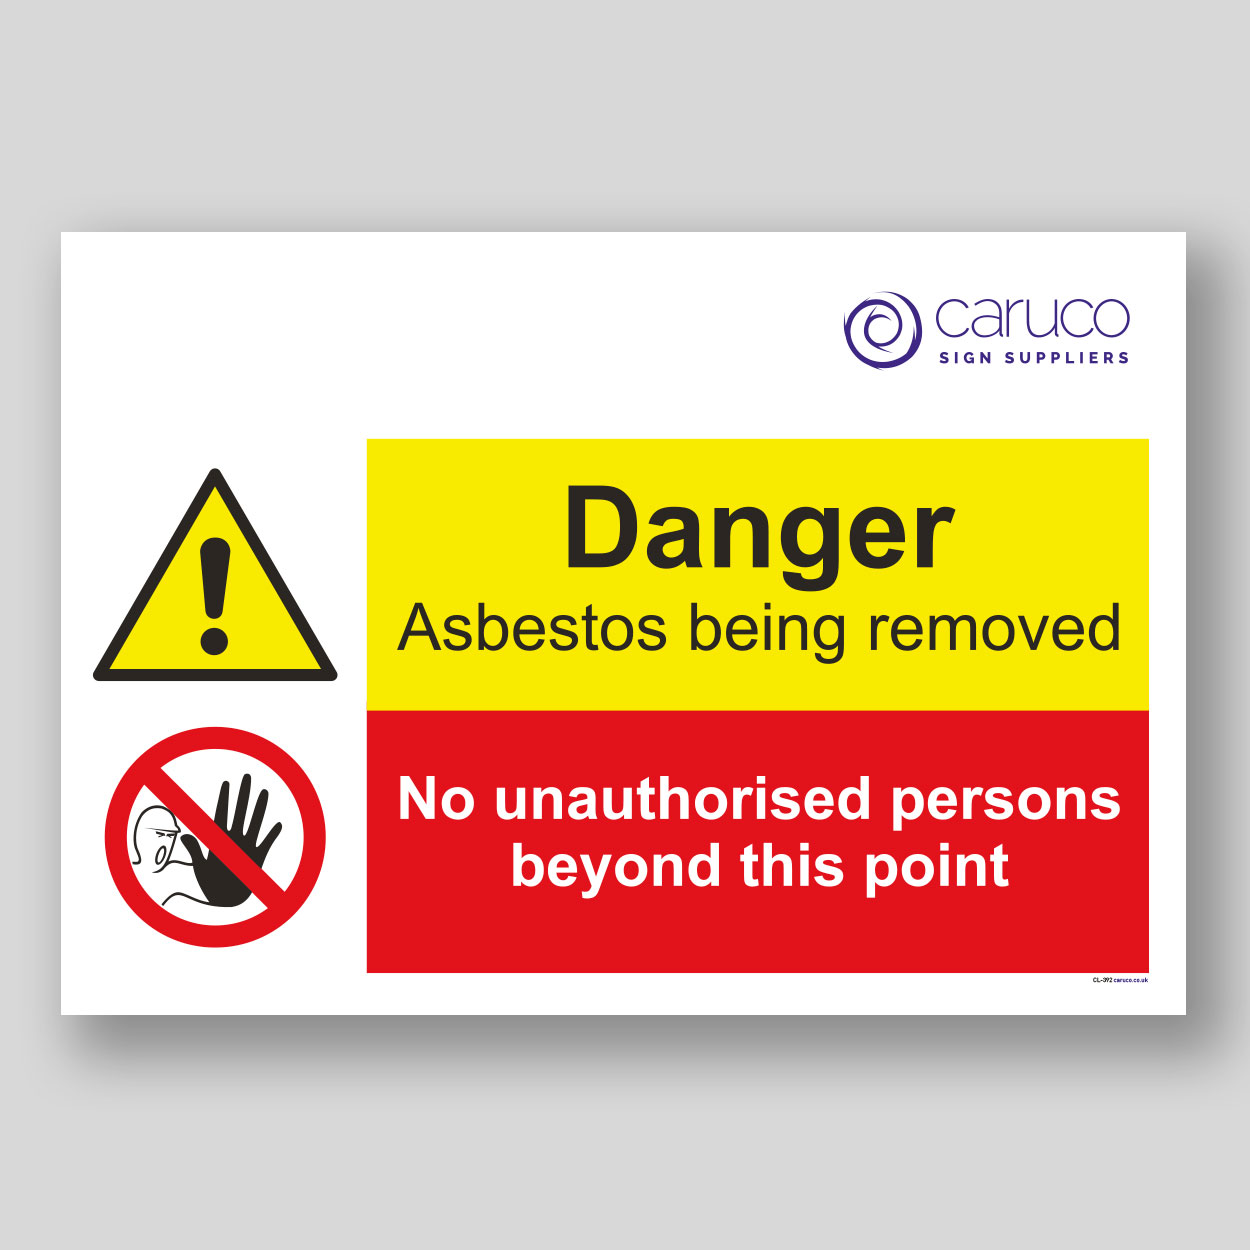 CL-392 Danger asbestos - no unauthorised persons